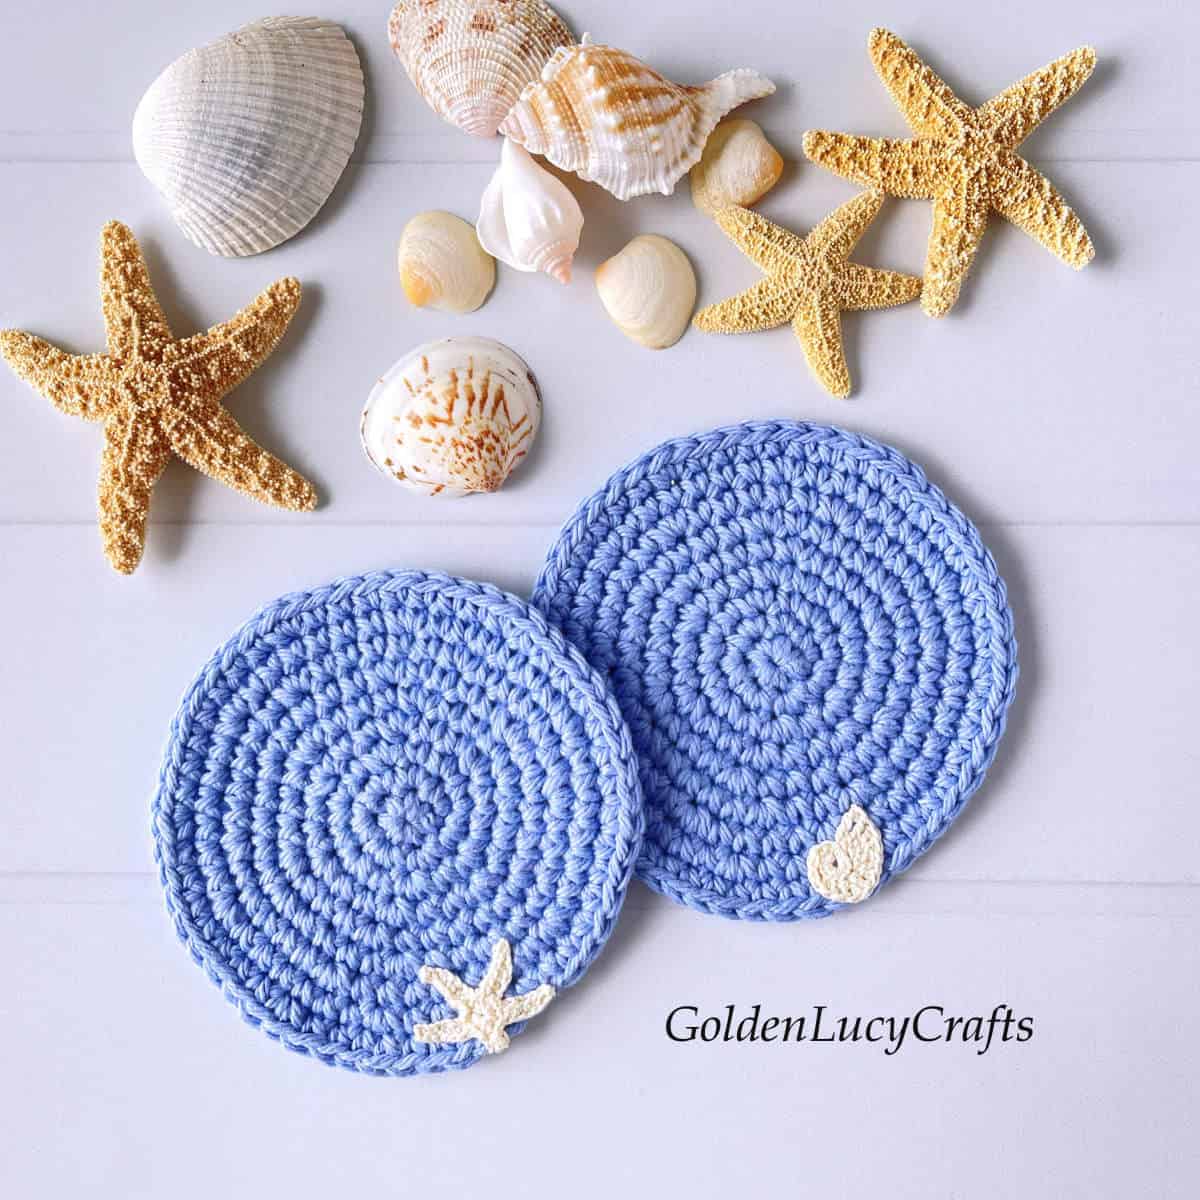 Crocheted ocean themed blue coasters, sea stars and sea shells.